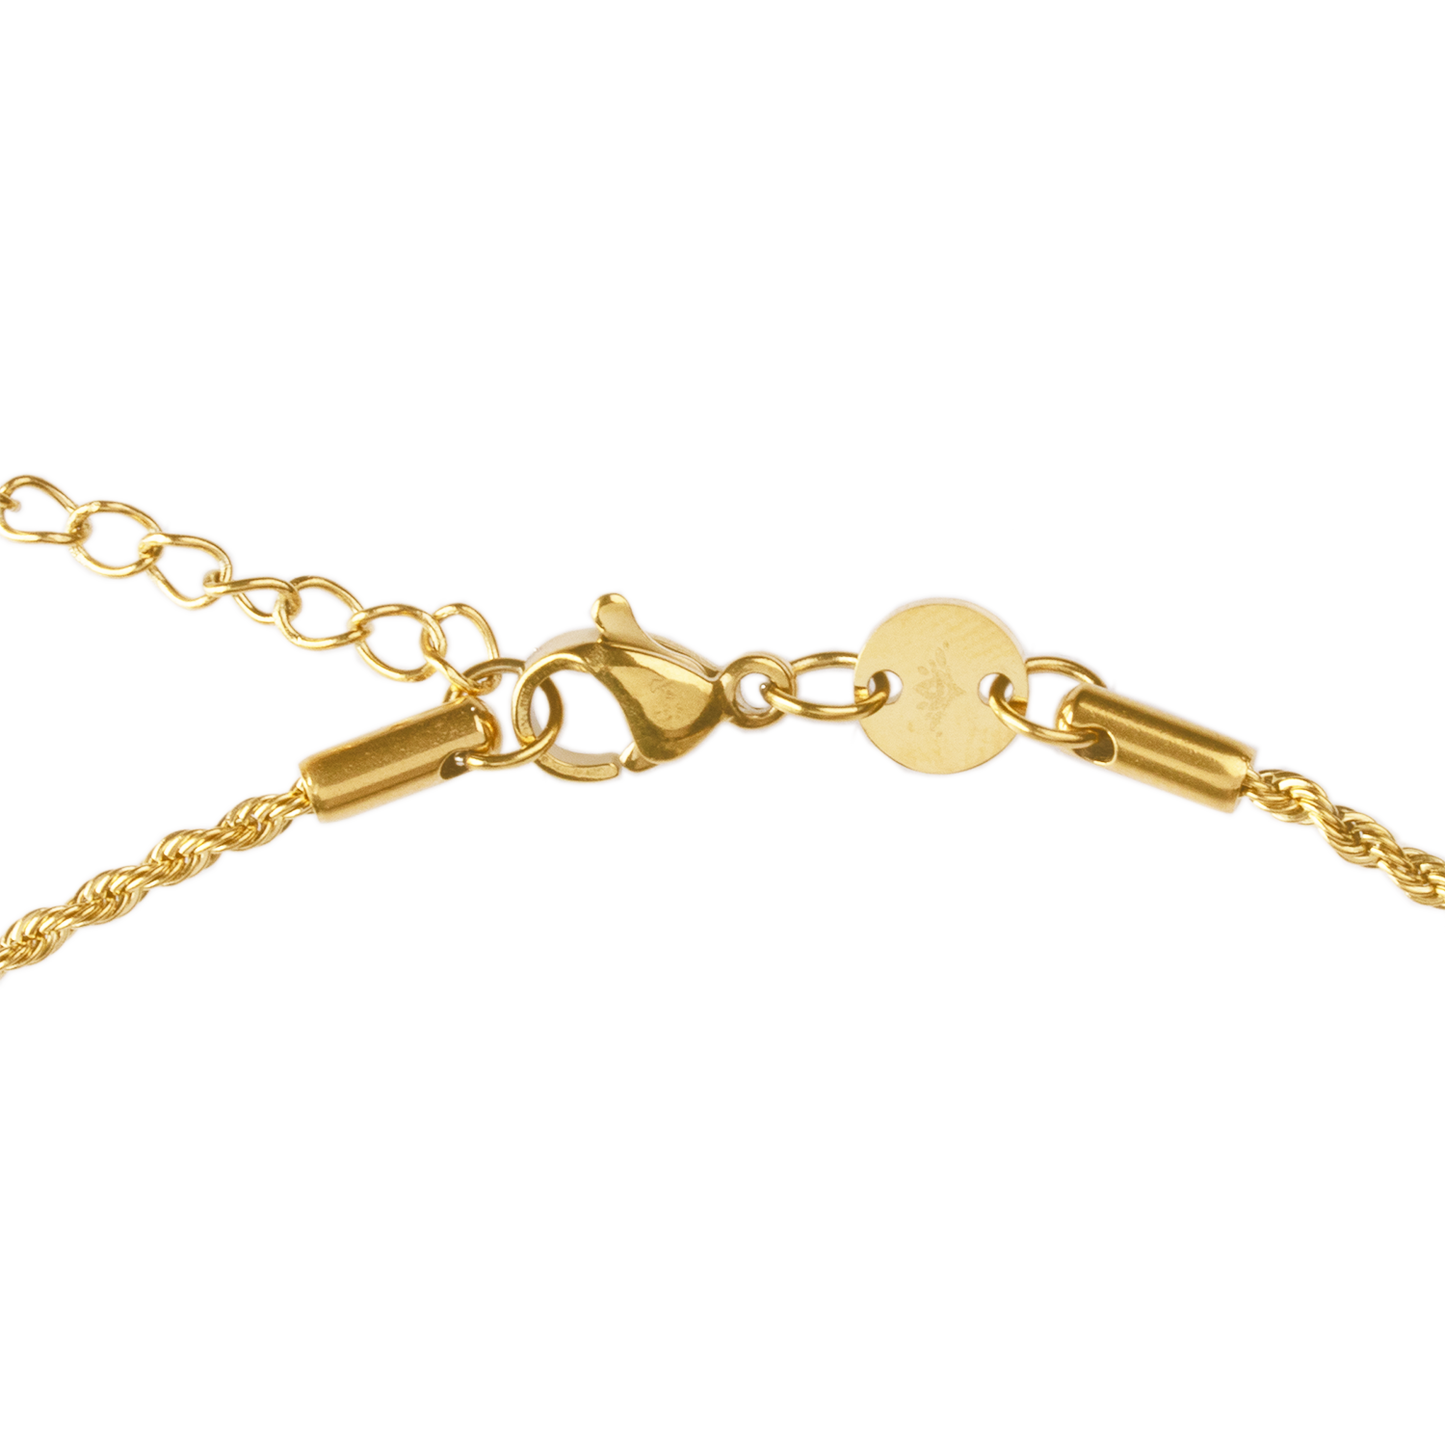 Taurus Necklace Gold